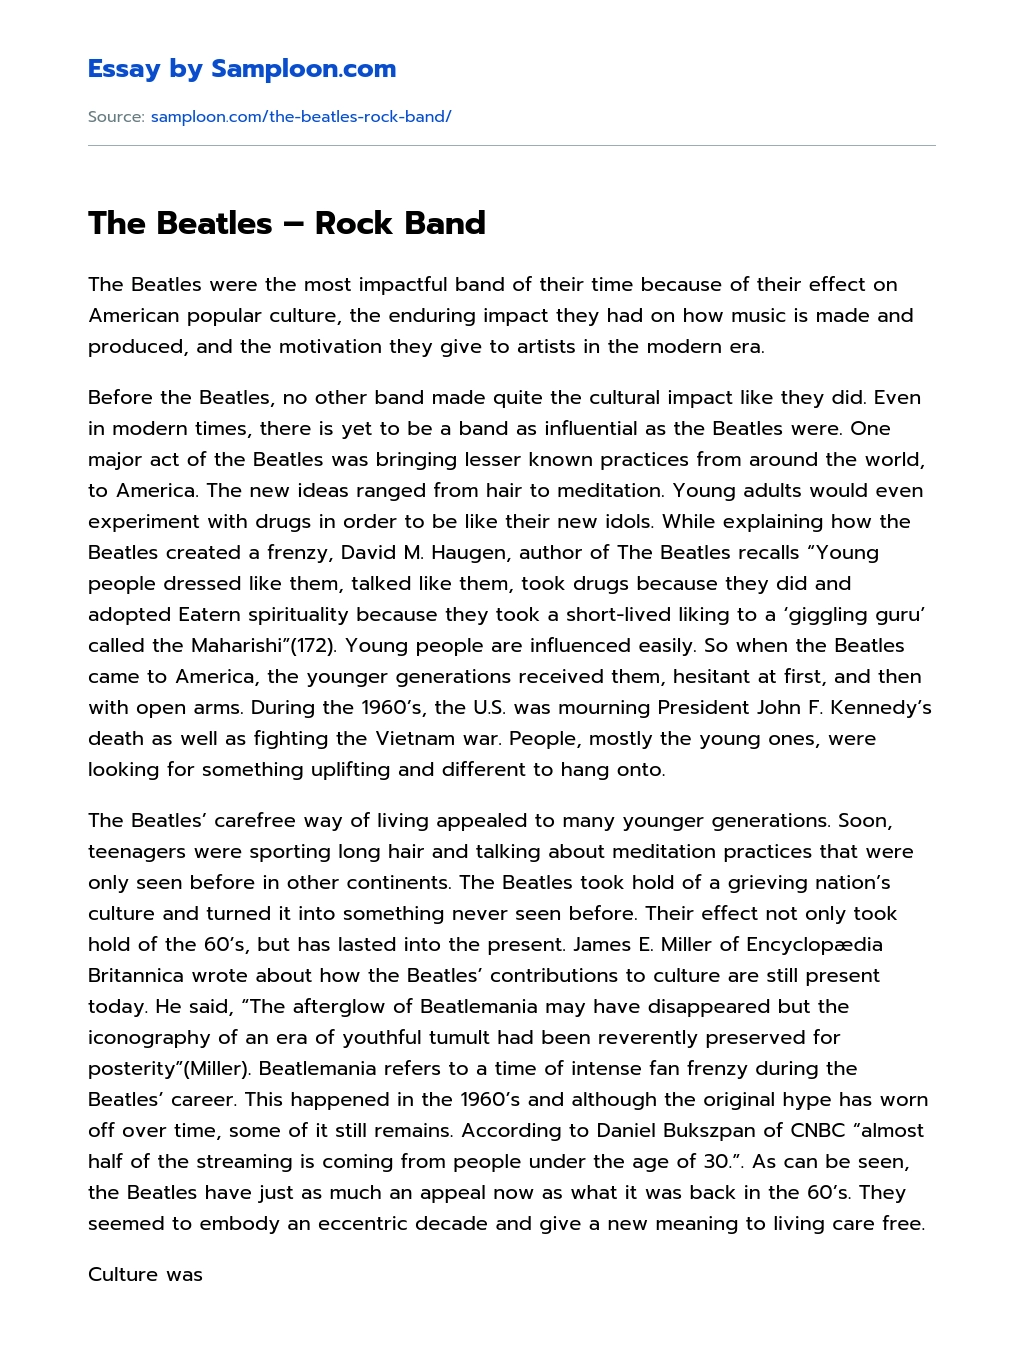 The Beatles – Rock Band essay